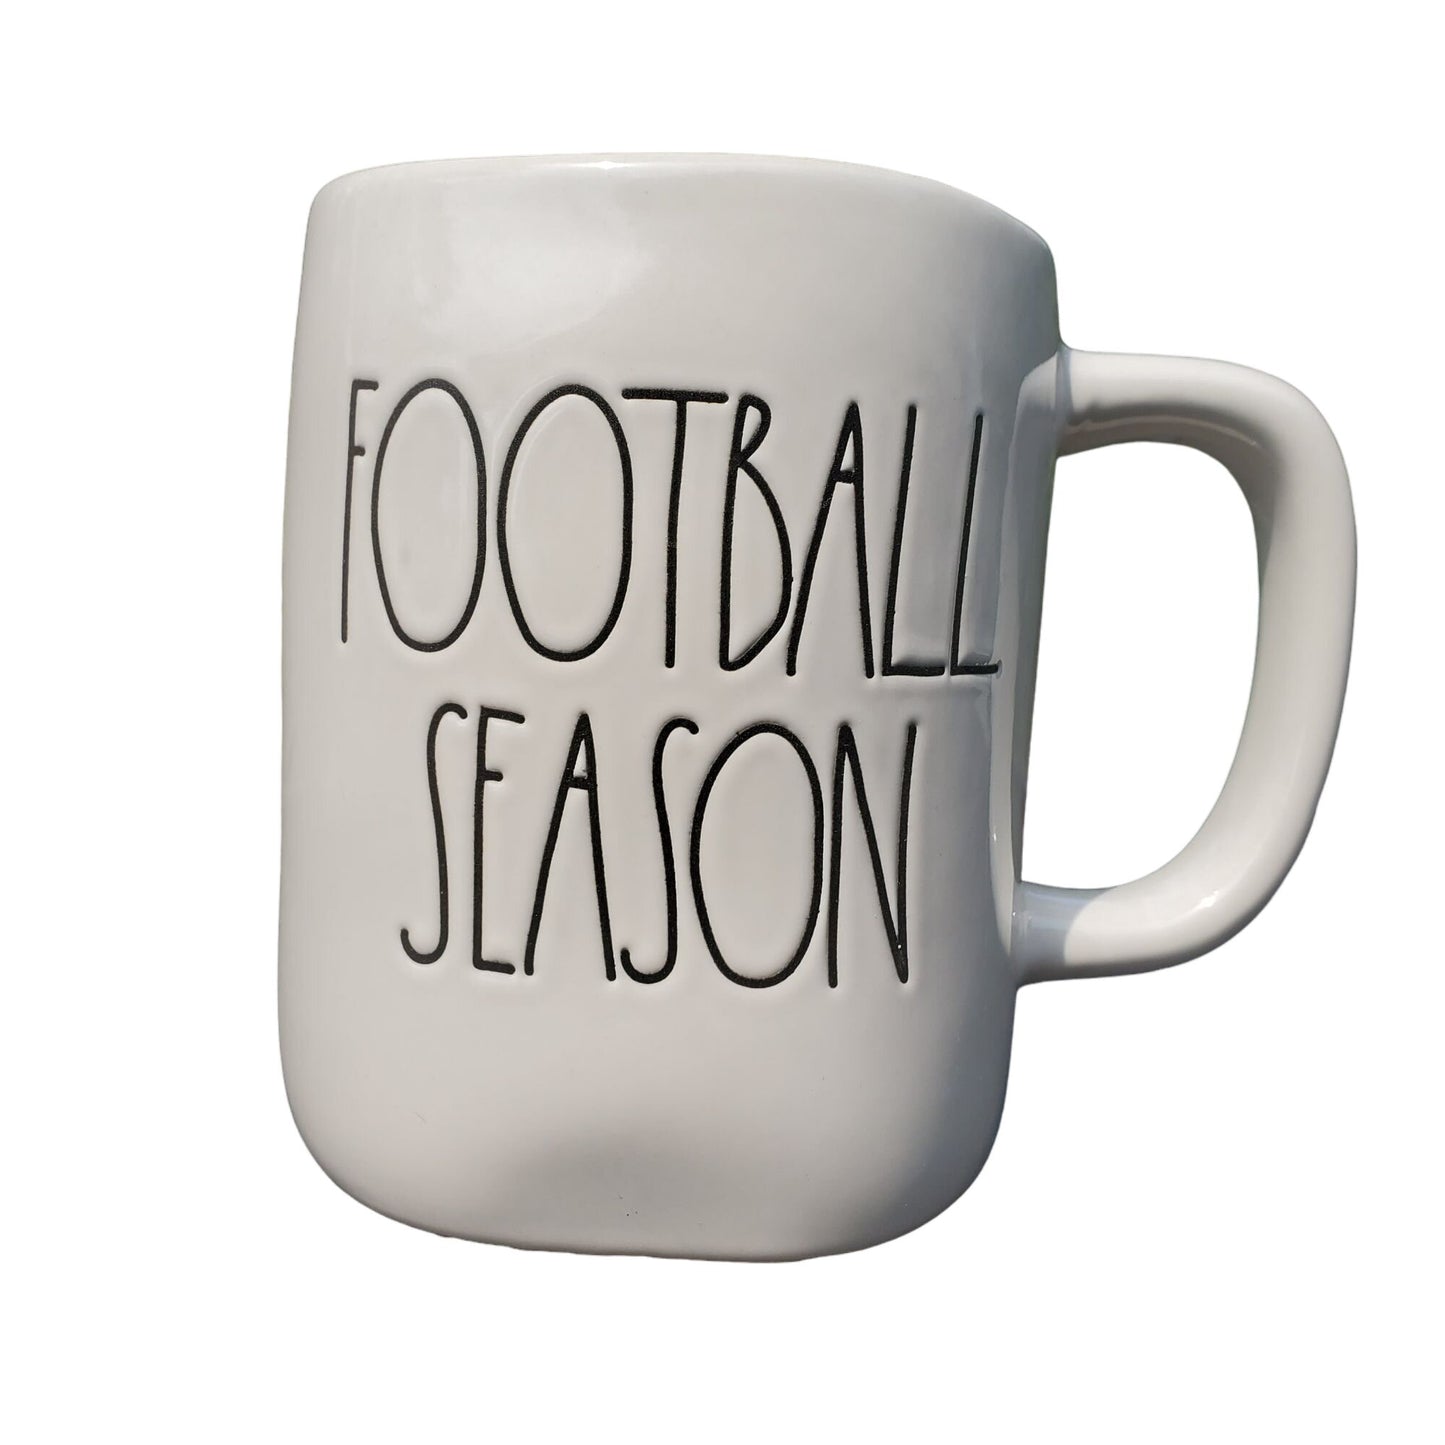 Rae Dunn Football Season Coffee Mug